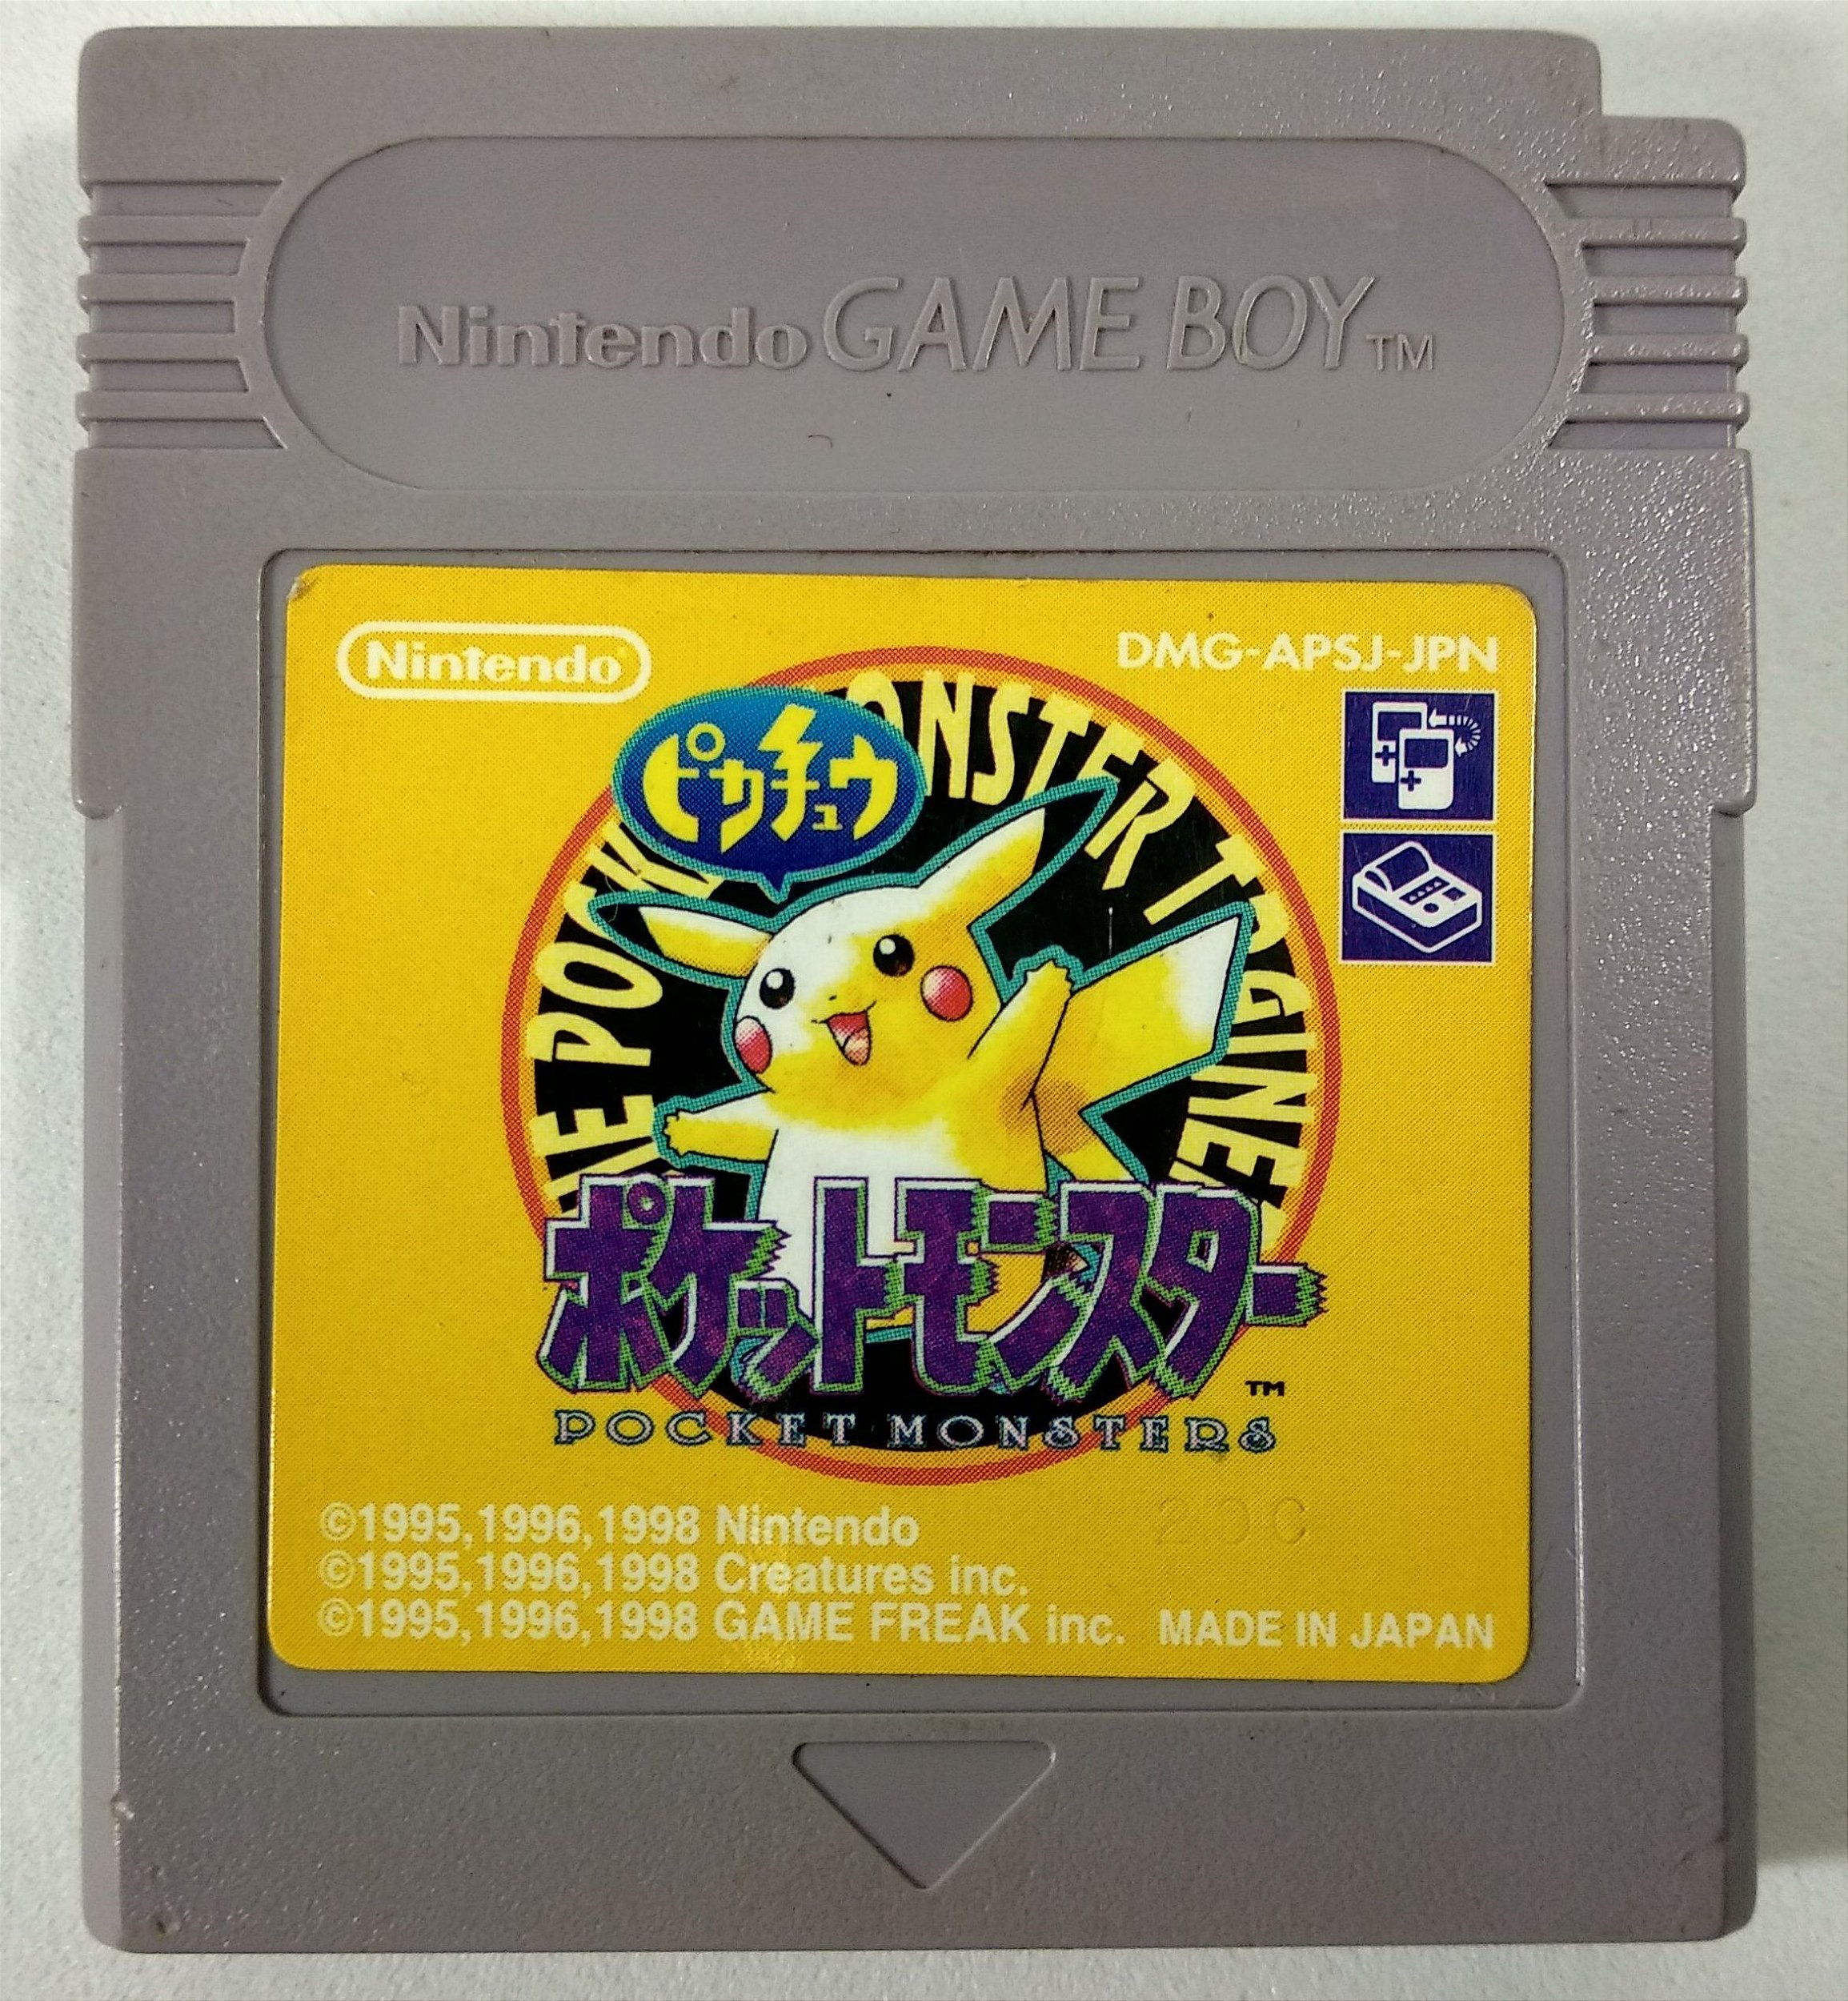 Pokemon Yellow Original - GBC - Sebo dos Games - 10 anos!